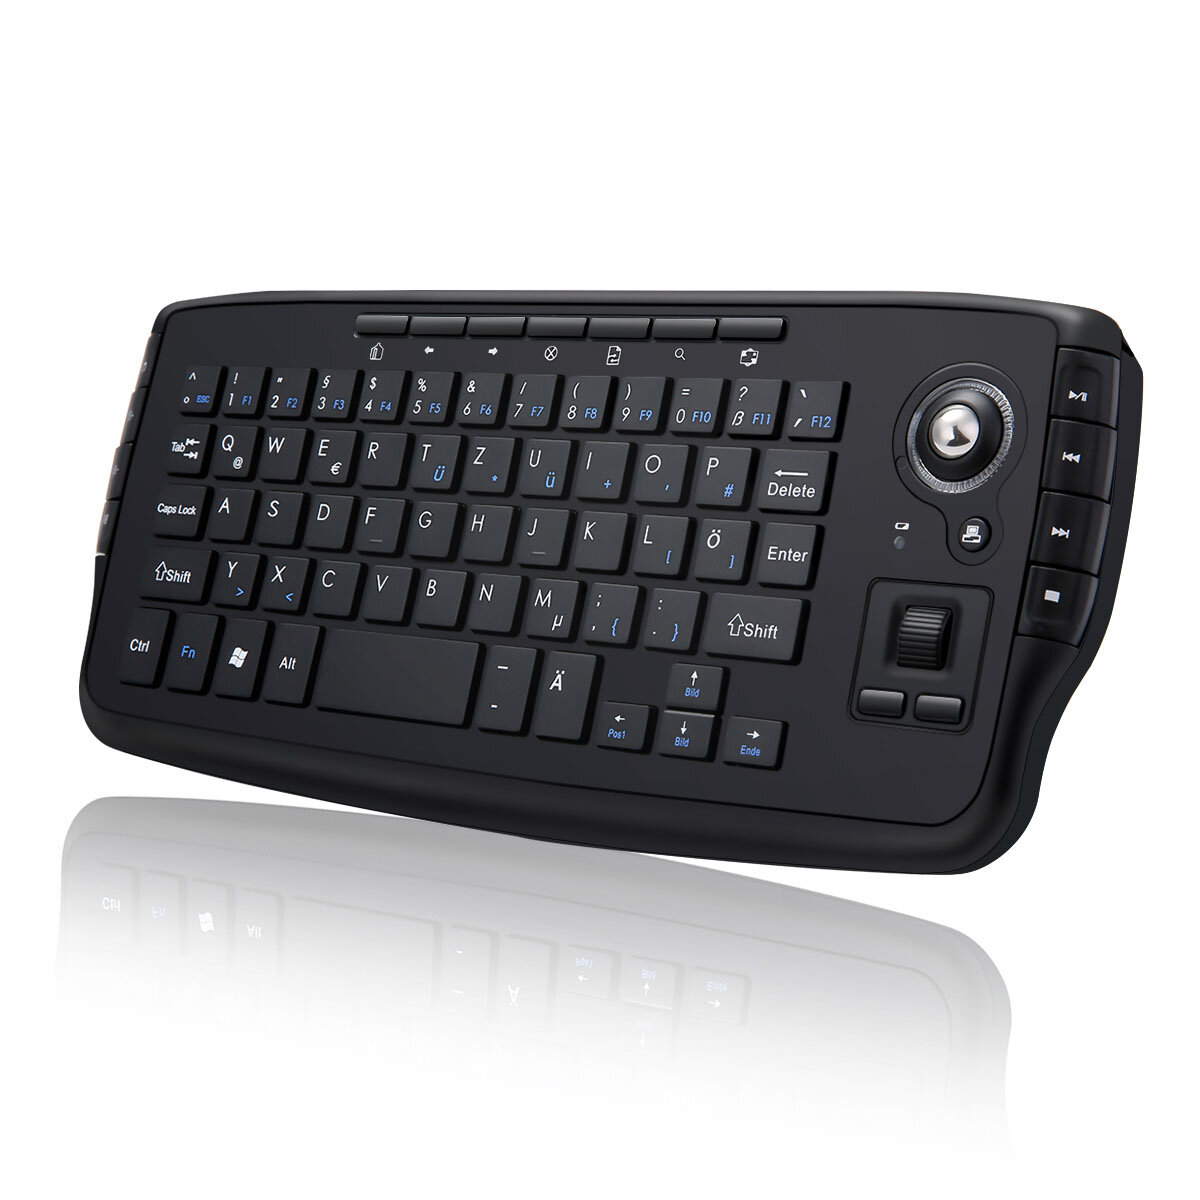 Bestrunner Mini Wireless Air Keyboard 2-in-1 muis scrollwiel Duits toetsenbord met optische trackball voor mini-pc Android